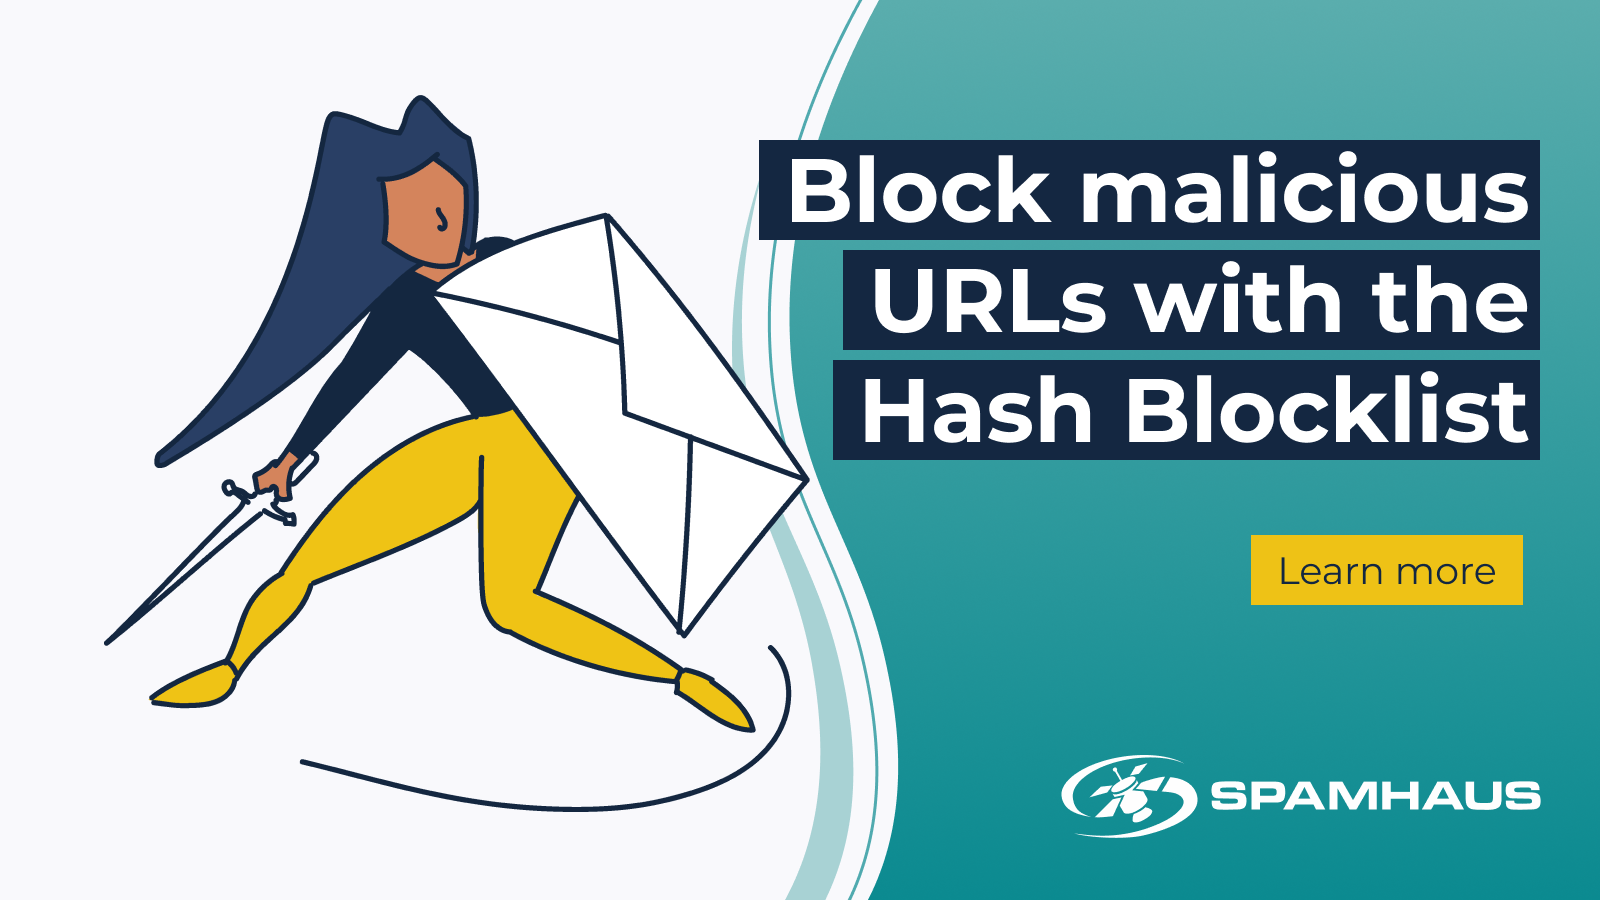 Block malicious URLs with Hash Blocklist